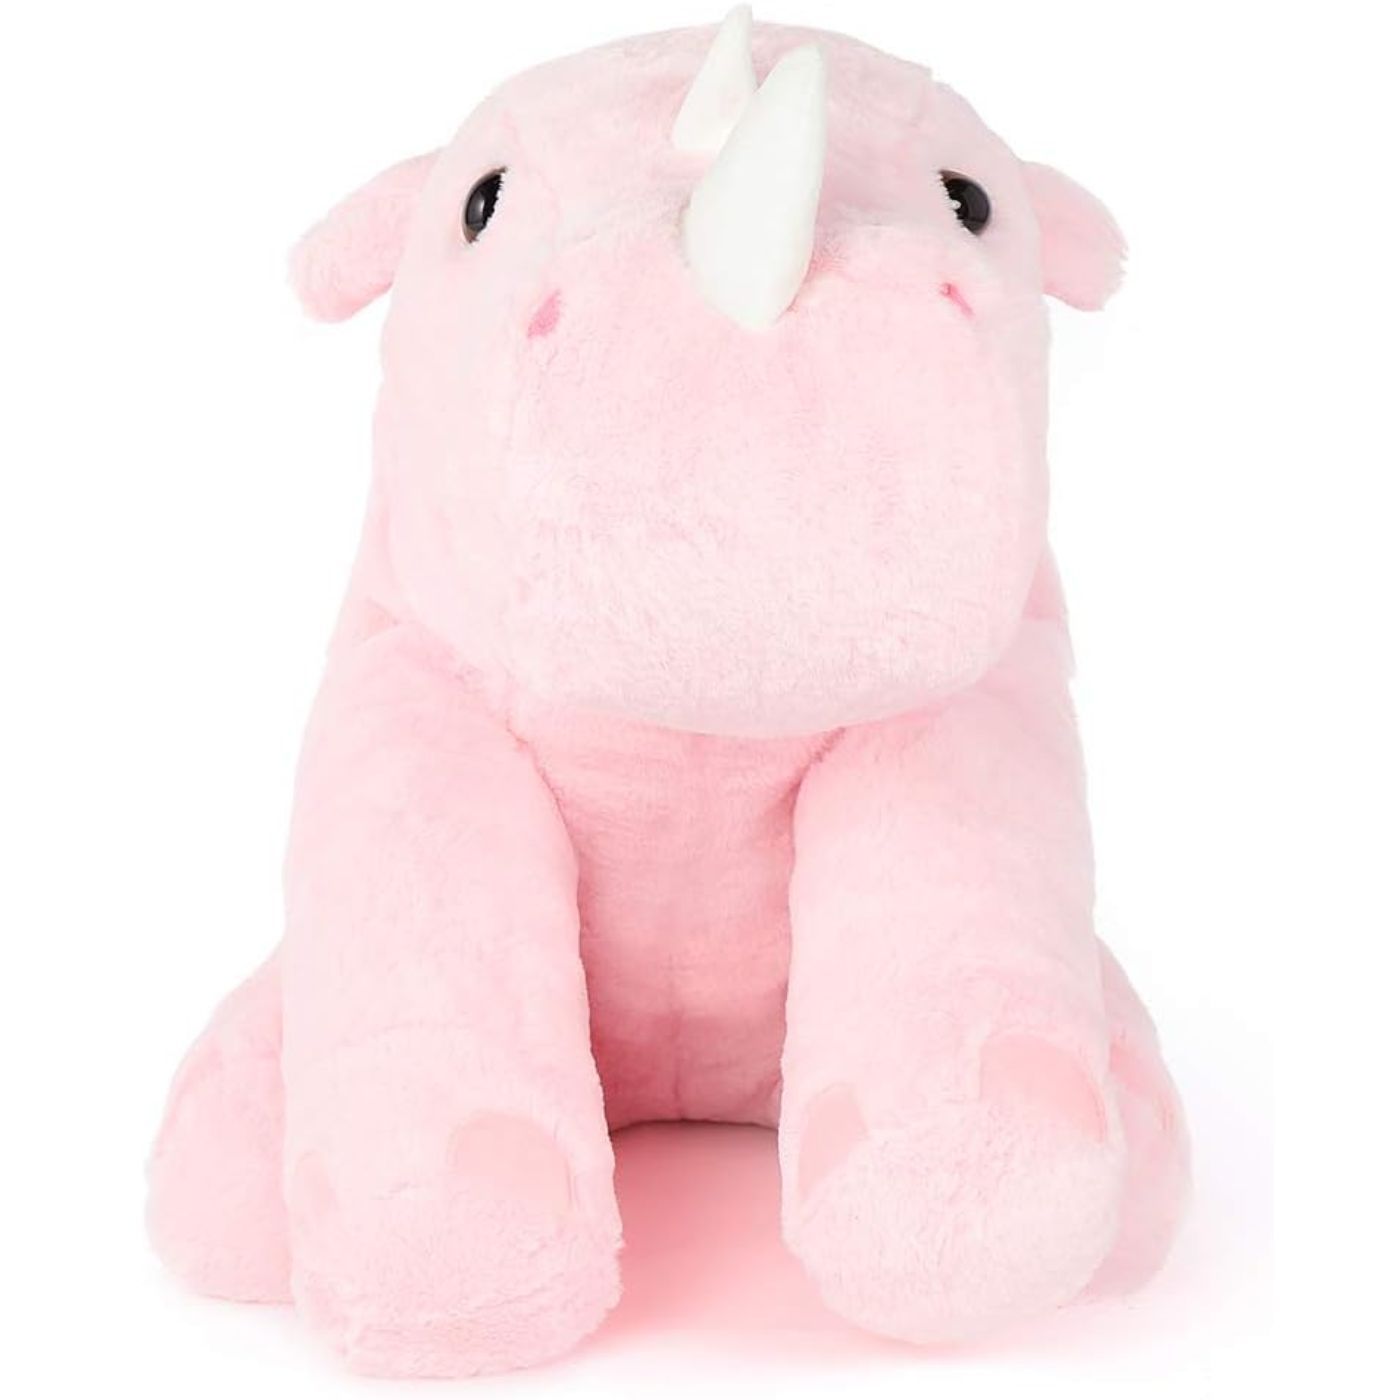 Rhino Plush Toy, Pink, 24 Inches - MorisMos Stuffed Animal Toys